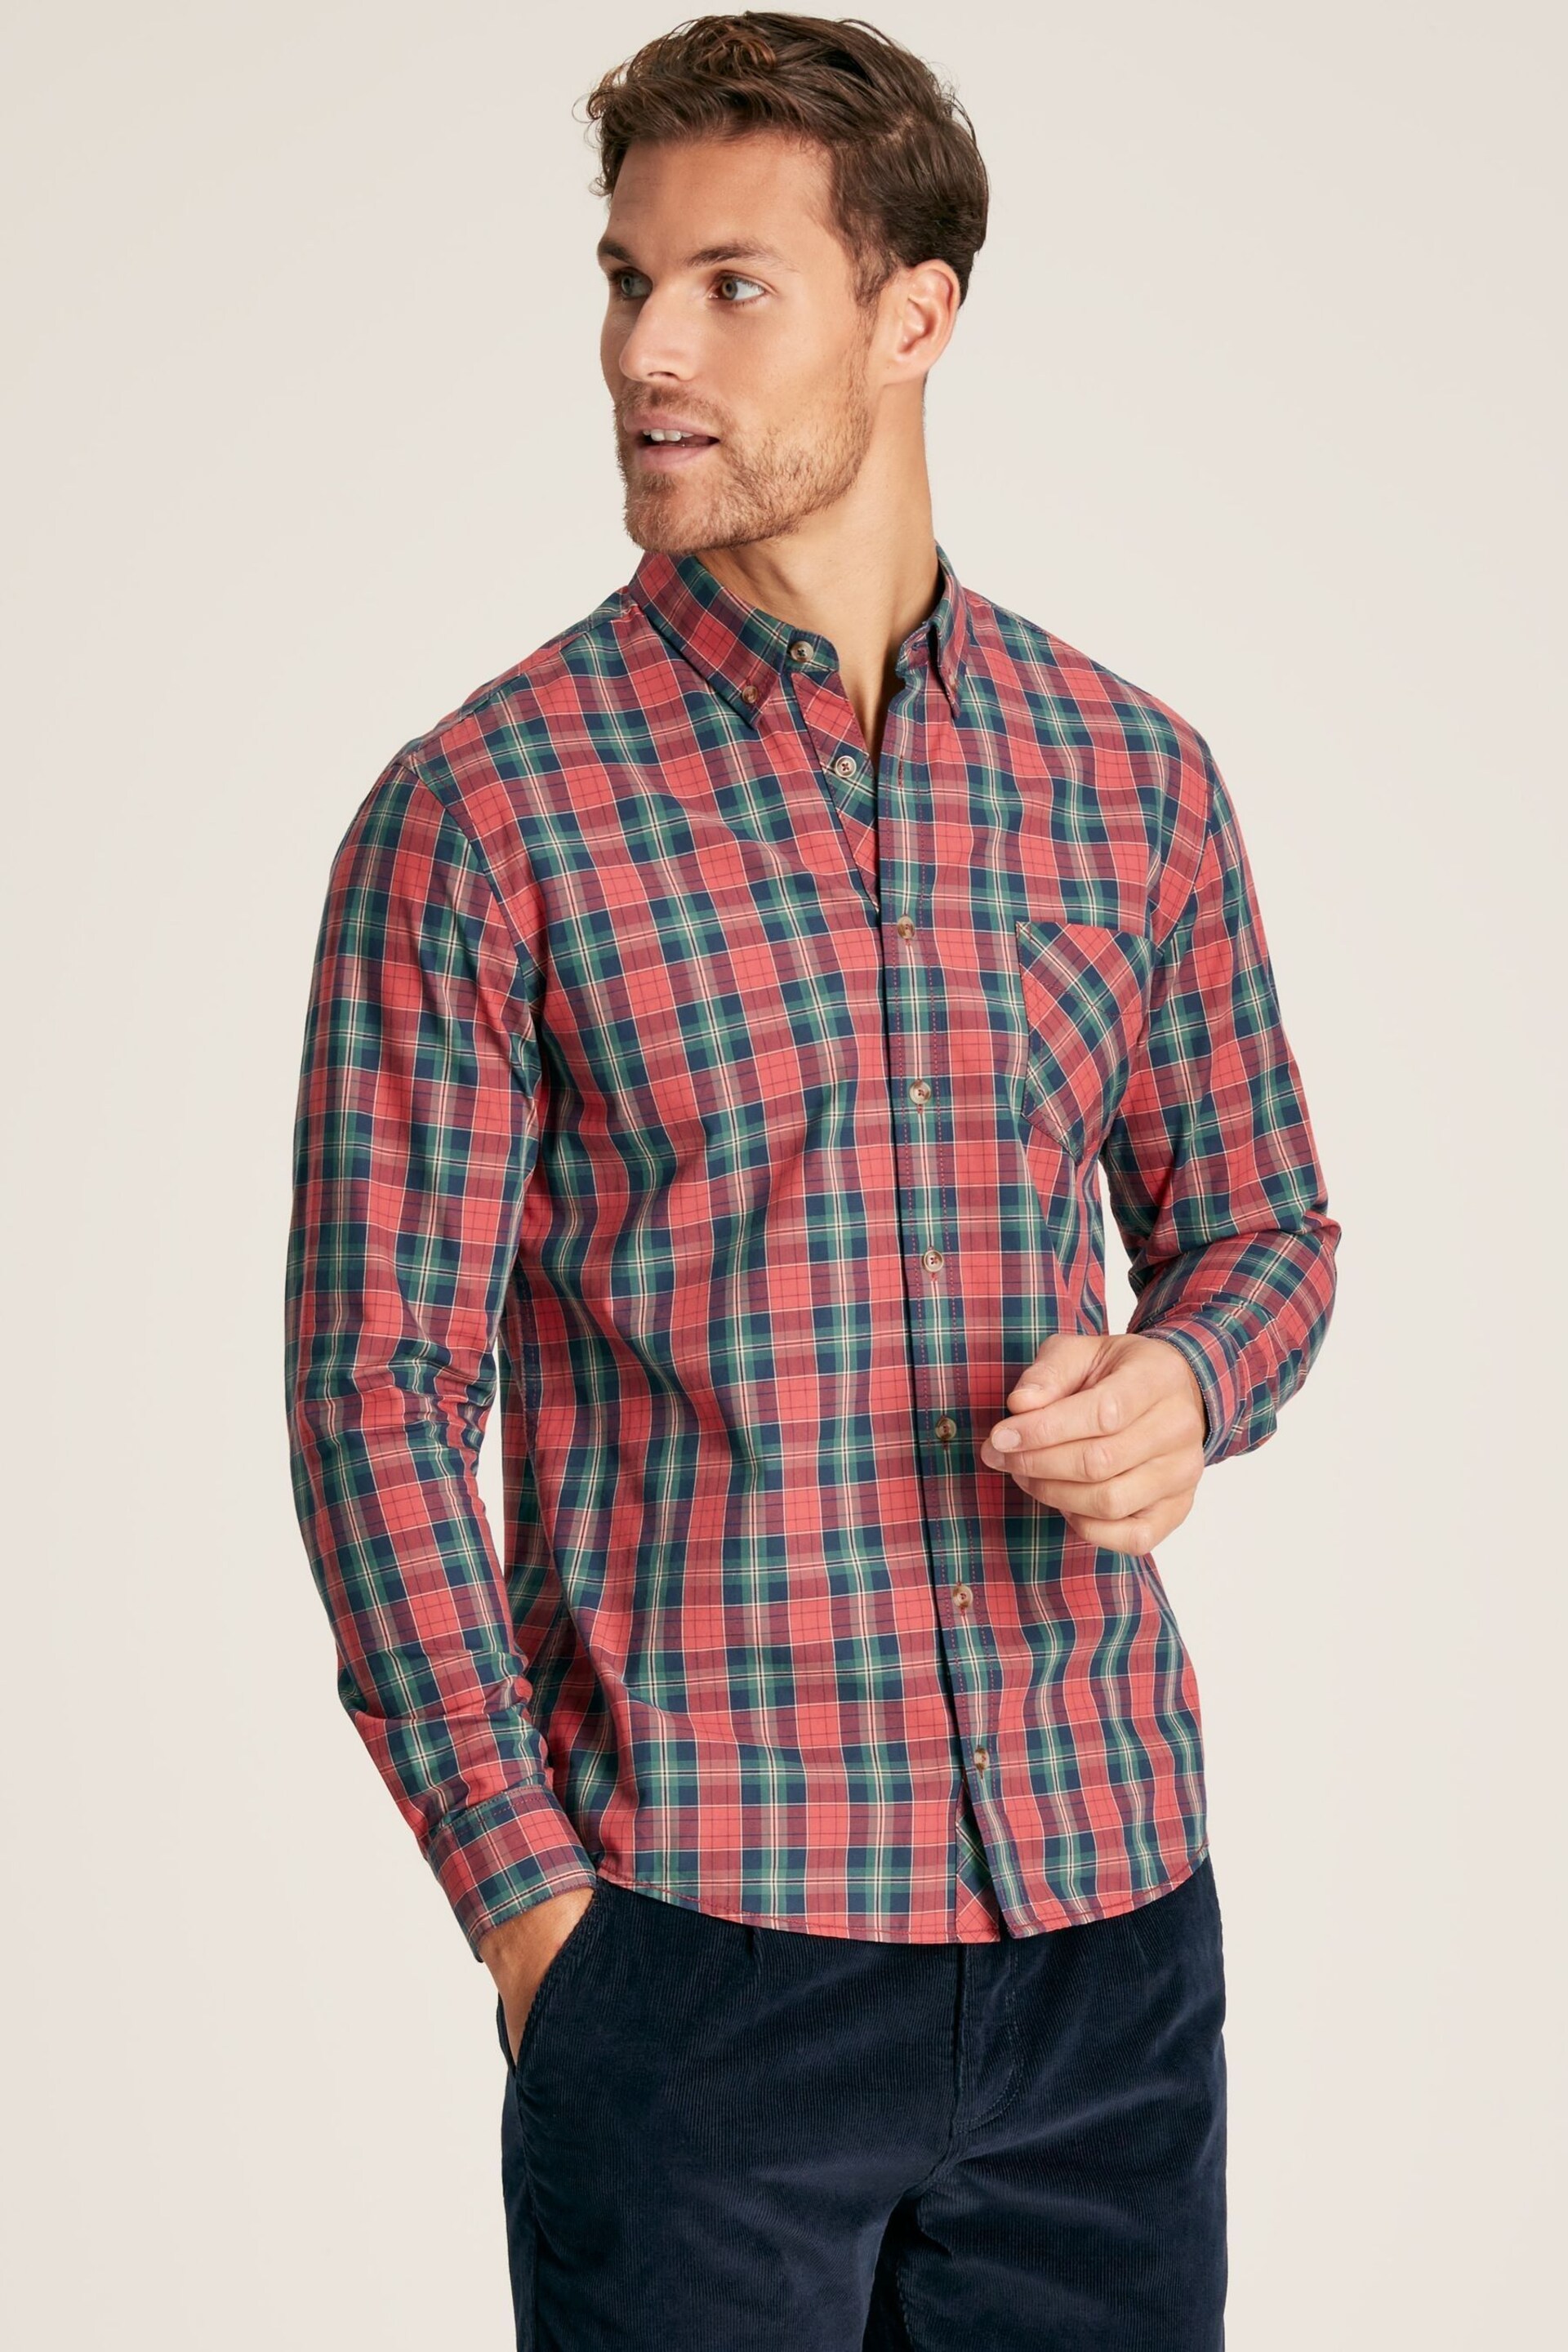 Joules Goodridge Red Check Long Sleeve Cotton Poplin Shirt - Image 1 of 7